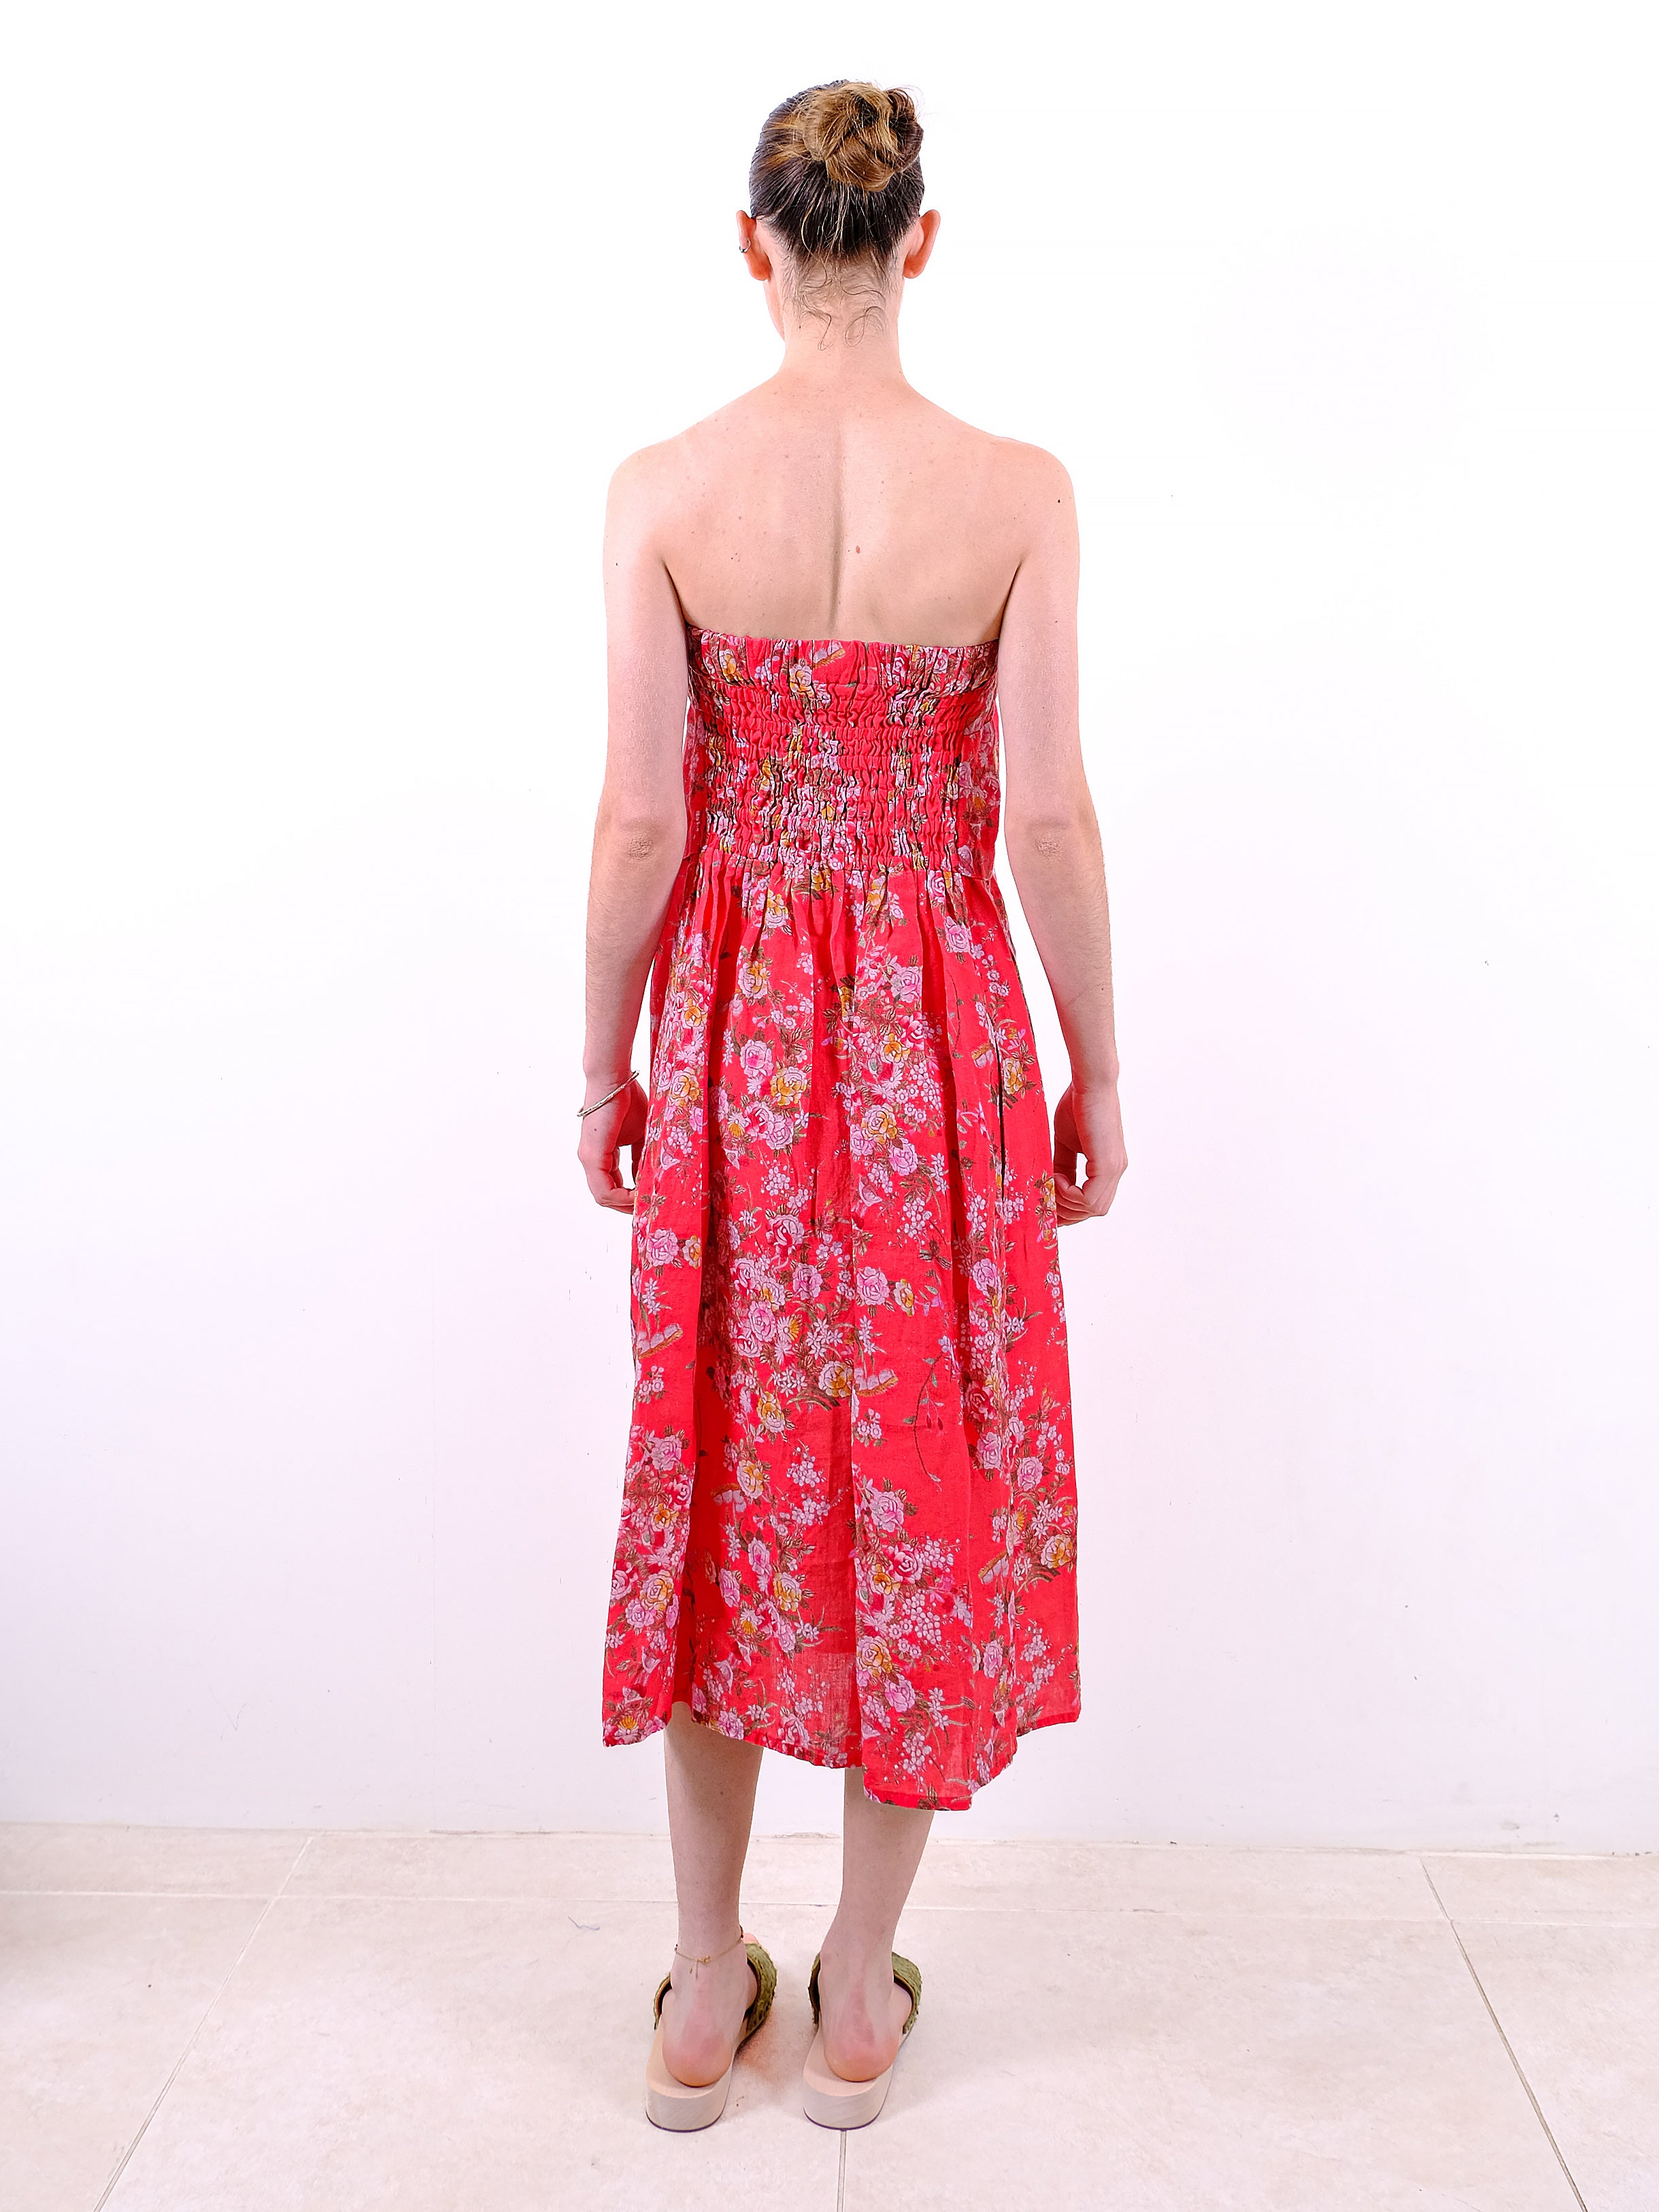 Vintage Linen Lily Skirt Dress